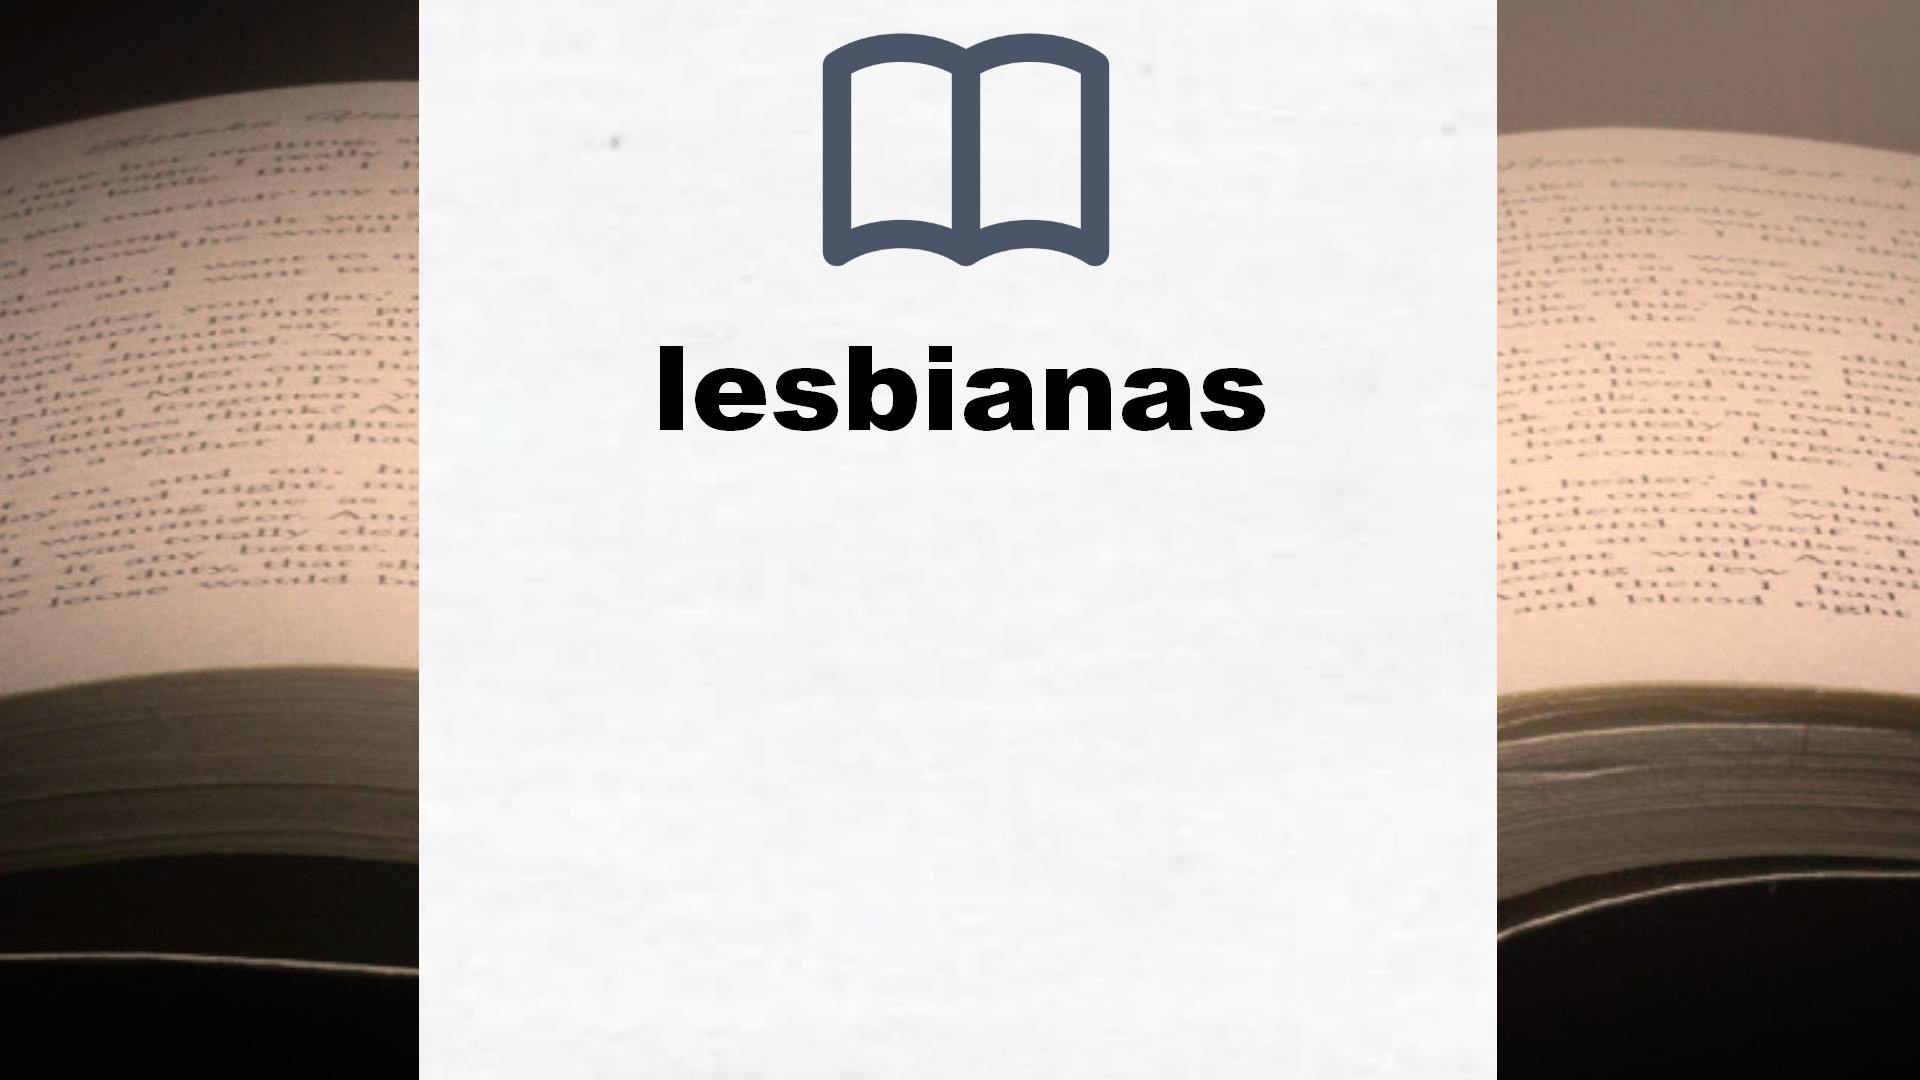 Libros sobre lesbianas